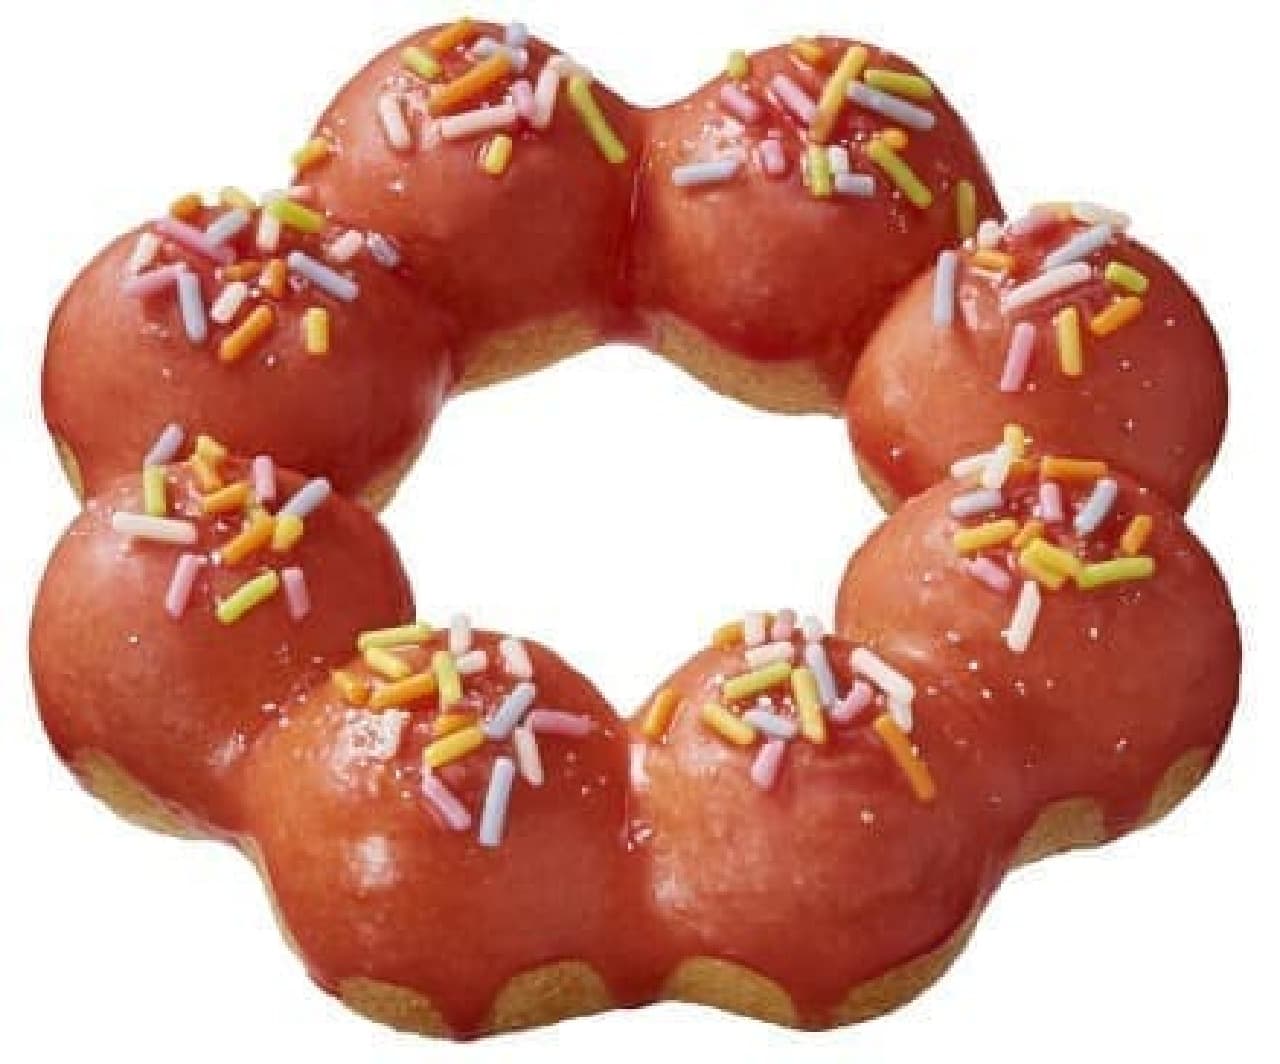 Mister Donut "Pon de Ring"